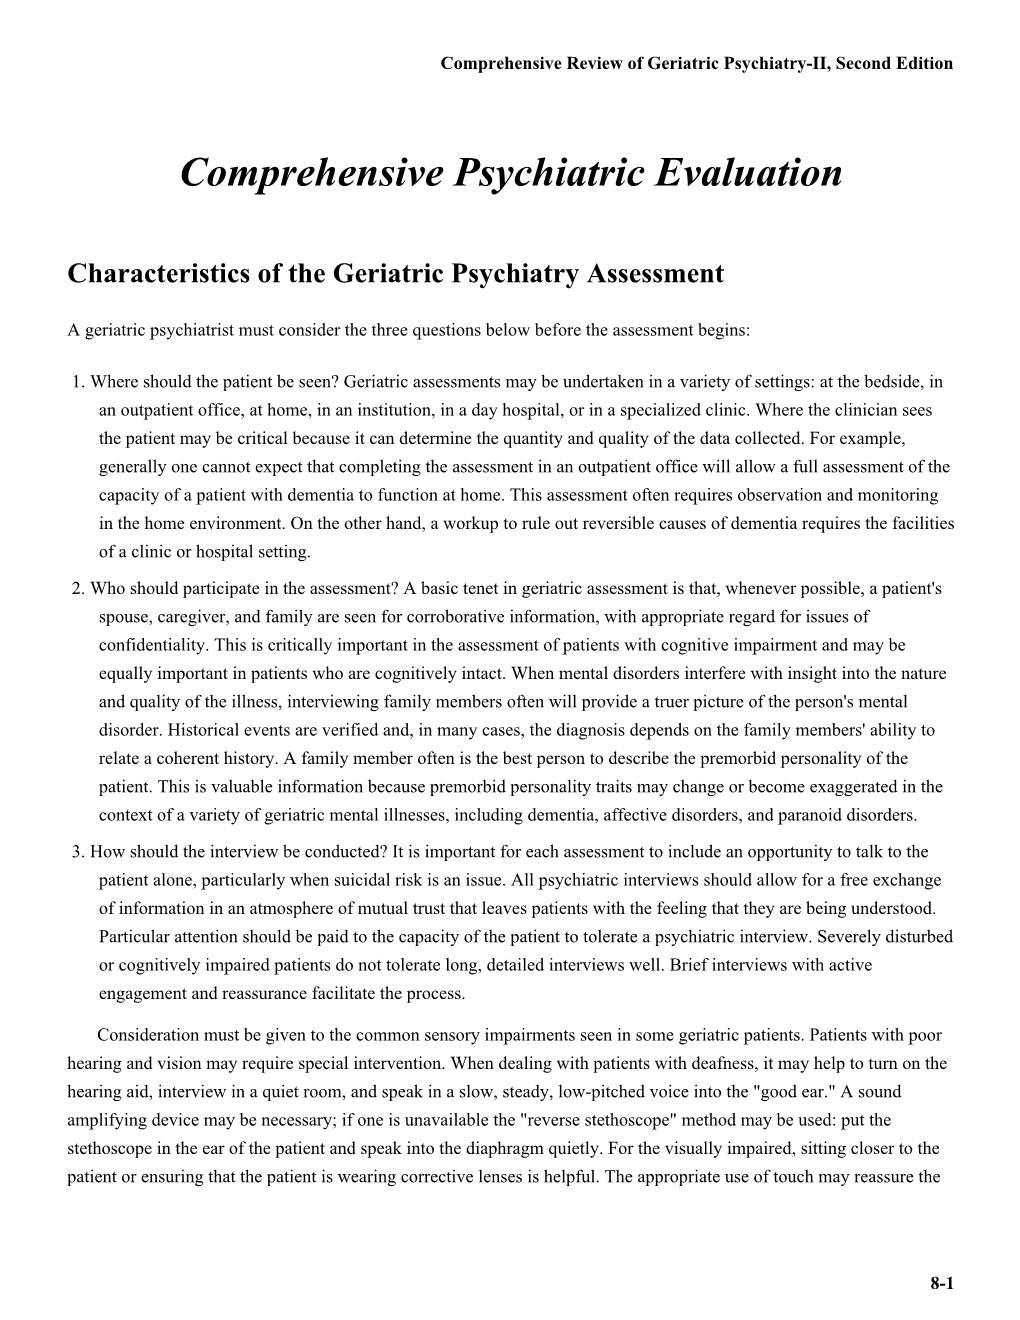 Comprehensive Psychiatric Evaluation